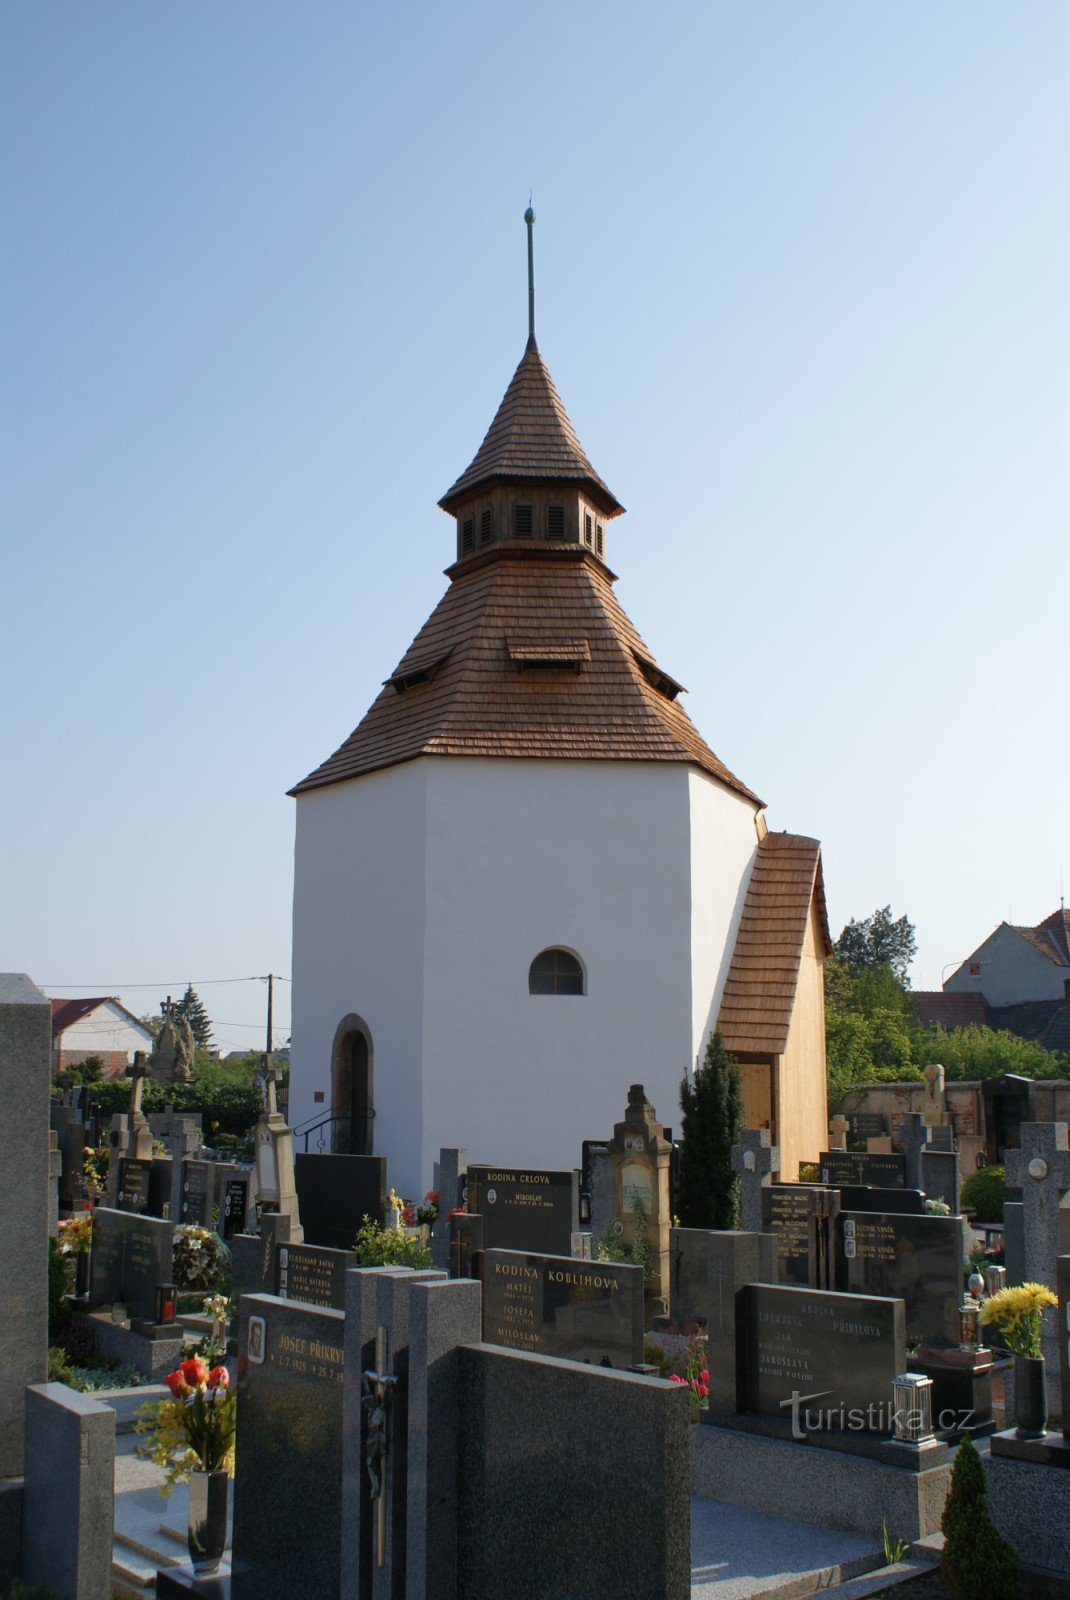 Staré Město біля Uh.Gradiště – територія кладовища з церквою св. Архангел Михаїл